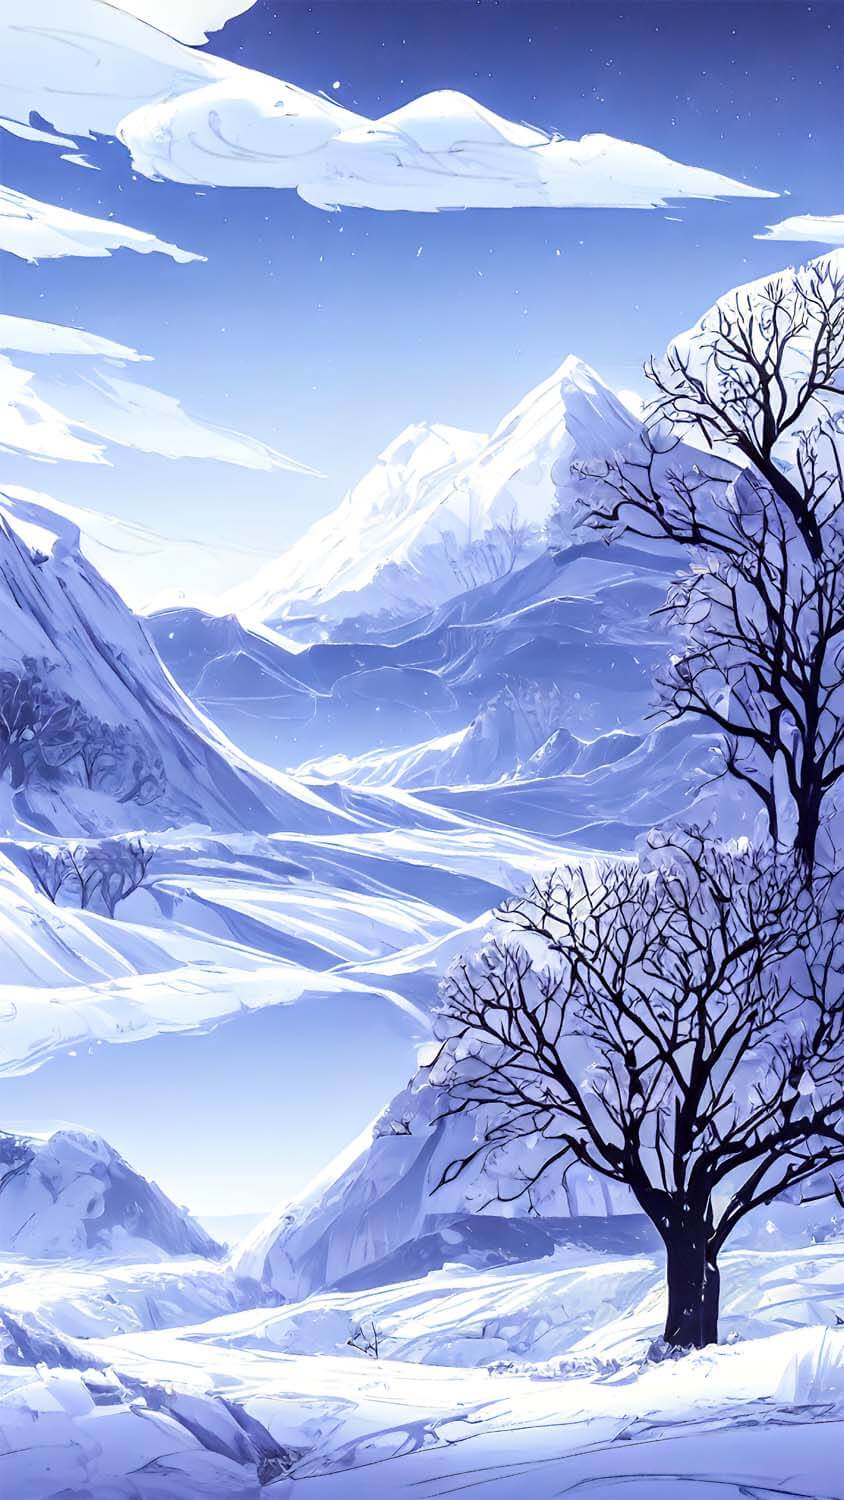 Snow Mountain IPhone Wallpaper HD - IPhone Wallpapers : iPhone Wallpapers